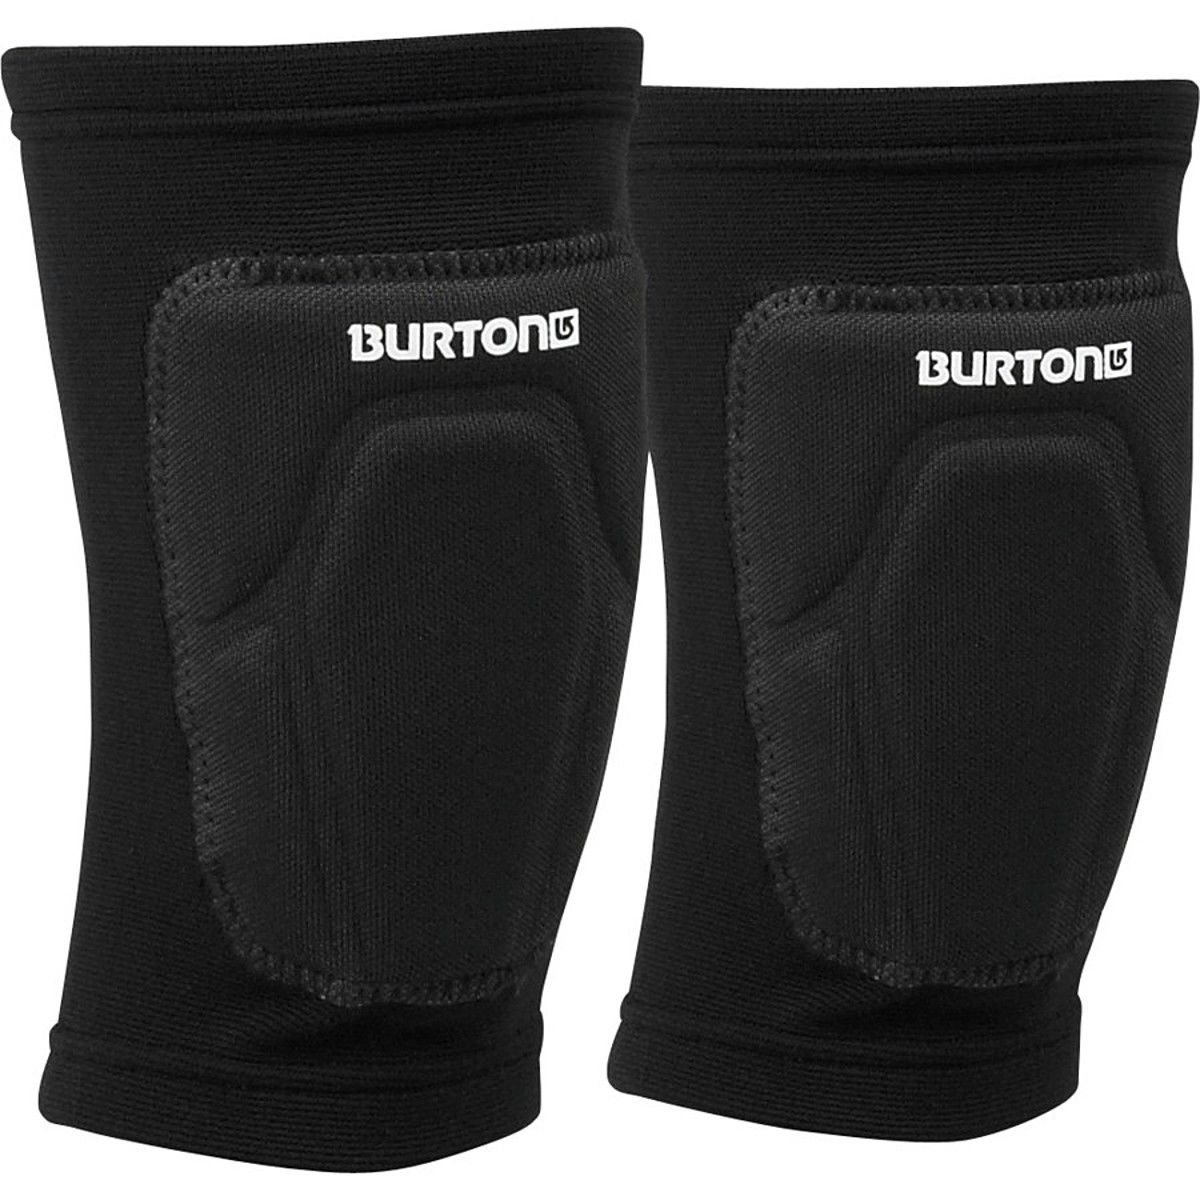  Burton Basic Knee Pad - Ski